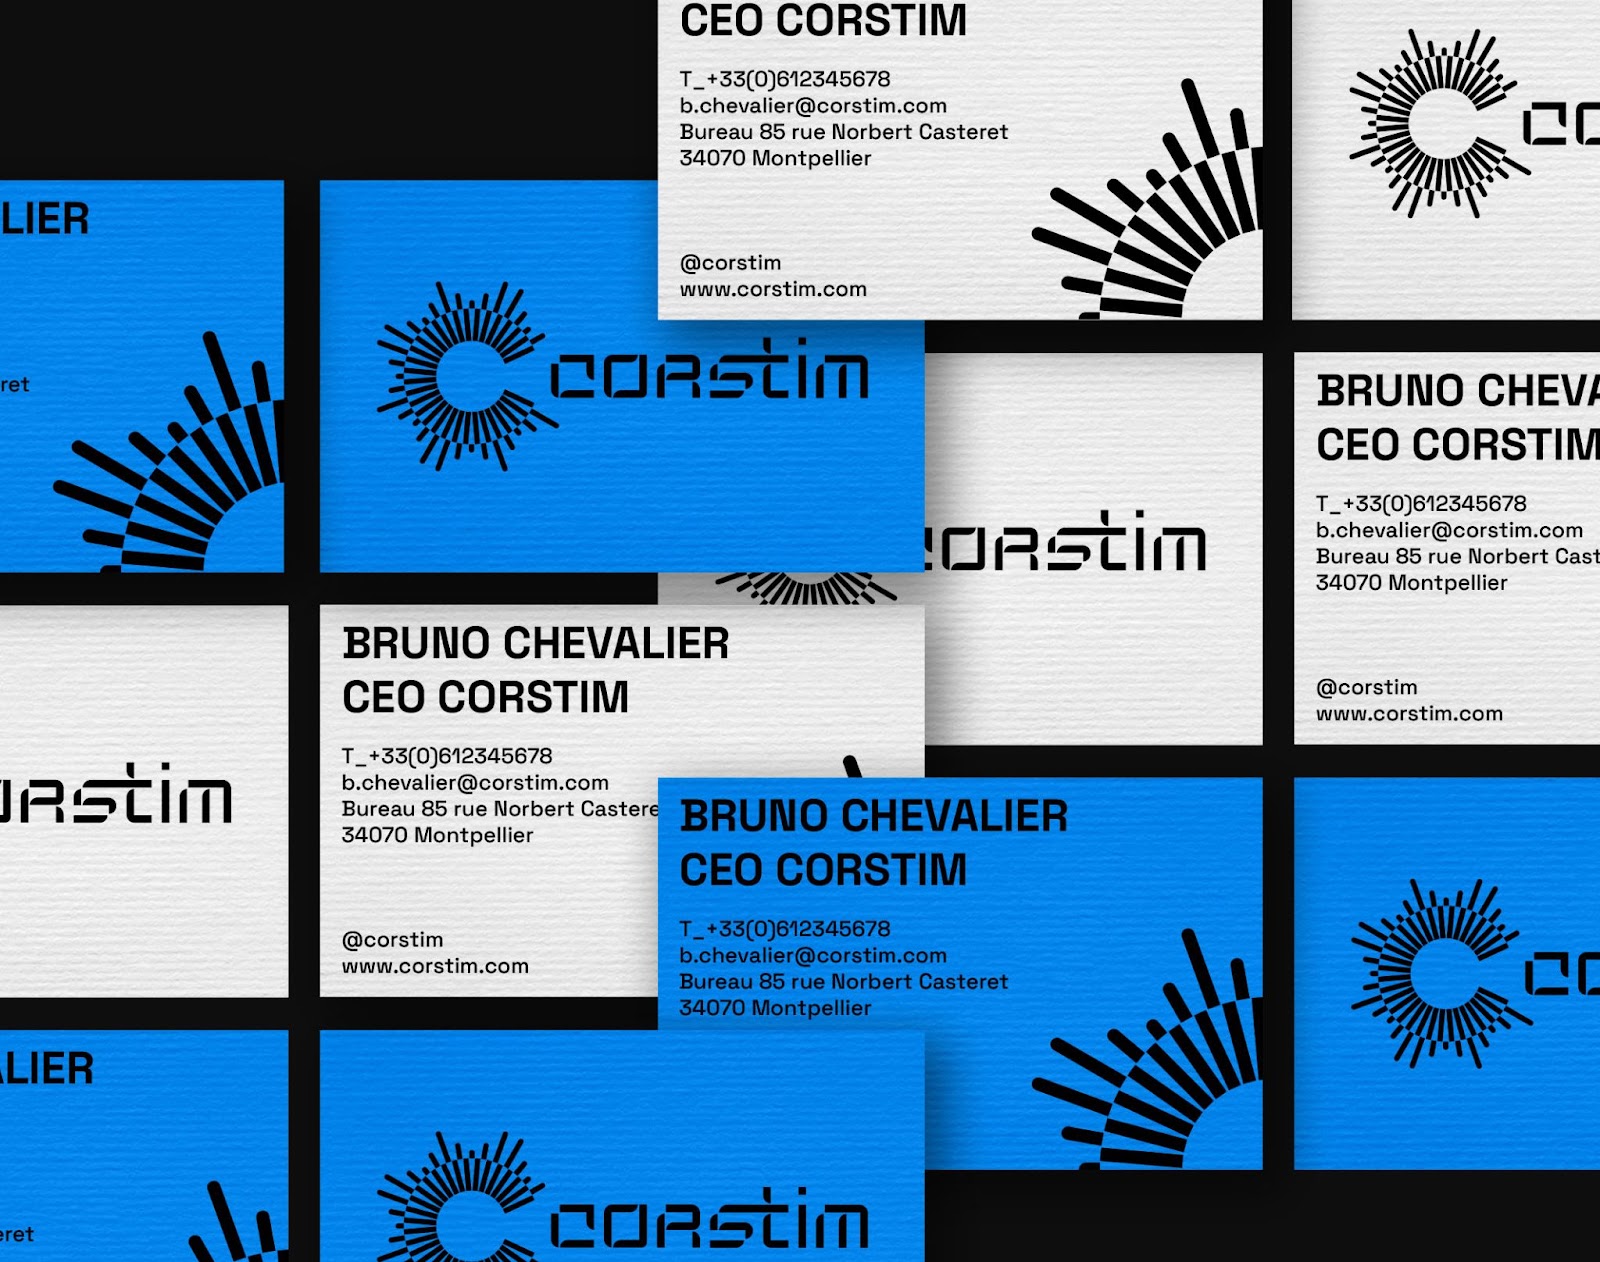 Artifact from the Revolutionizing Branding: CorStim's Visual Identity Journey article on abduzeedo